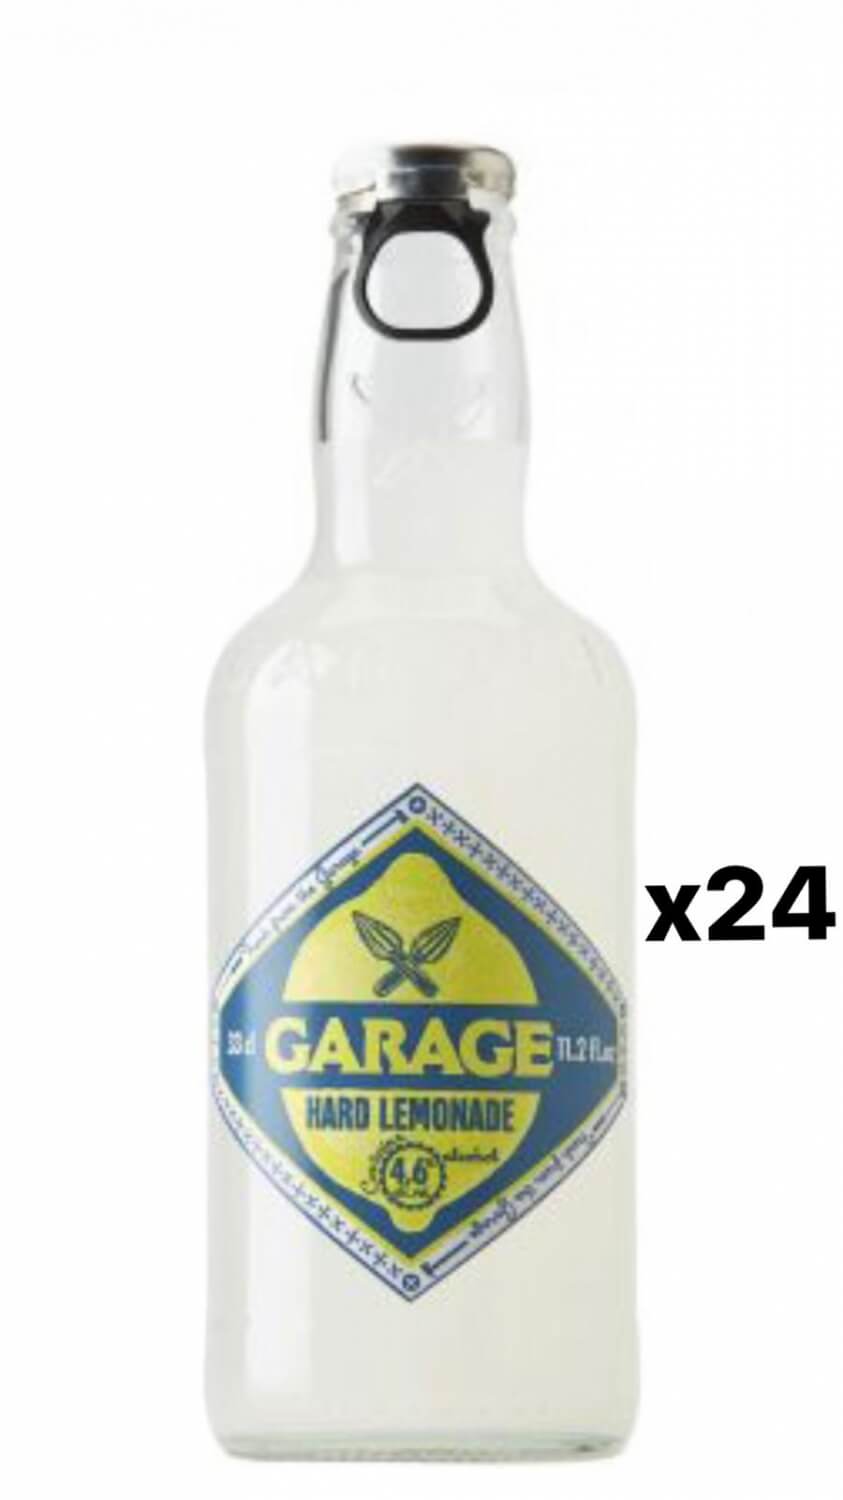 Garage Hard lemon 4% 24x27,5cl